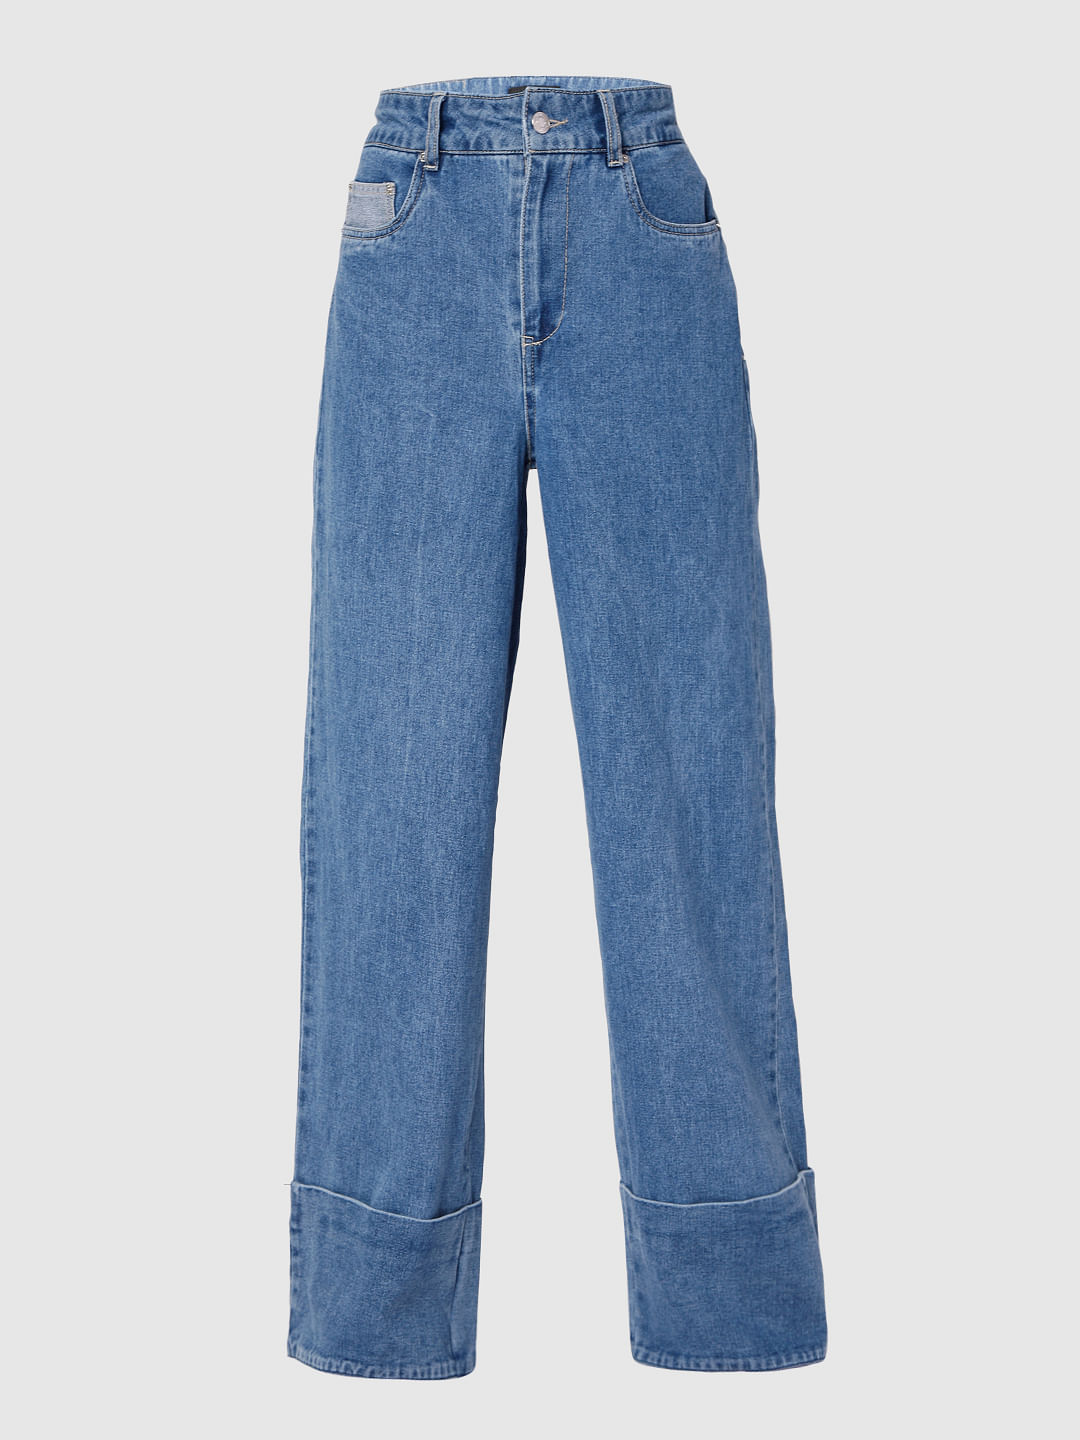 Buy The Indian Garage Co Men Blue Slim Fit Light Fade Stretchable Jeans -  Jeans for Men 17317910 | Myntra